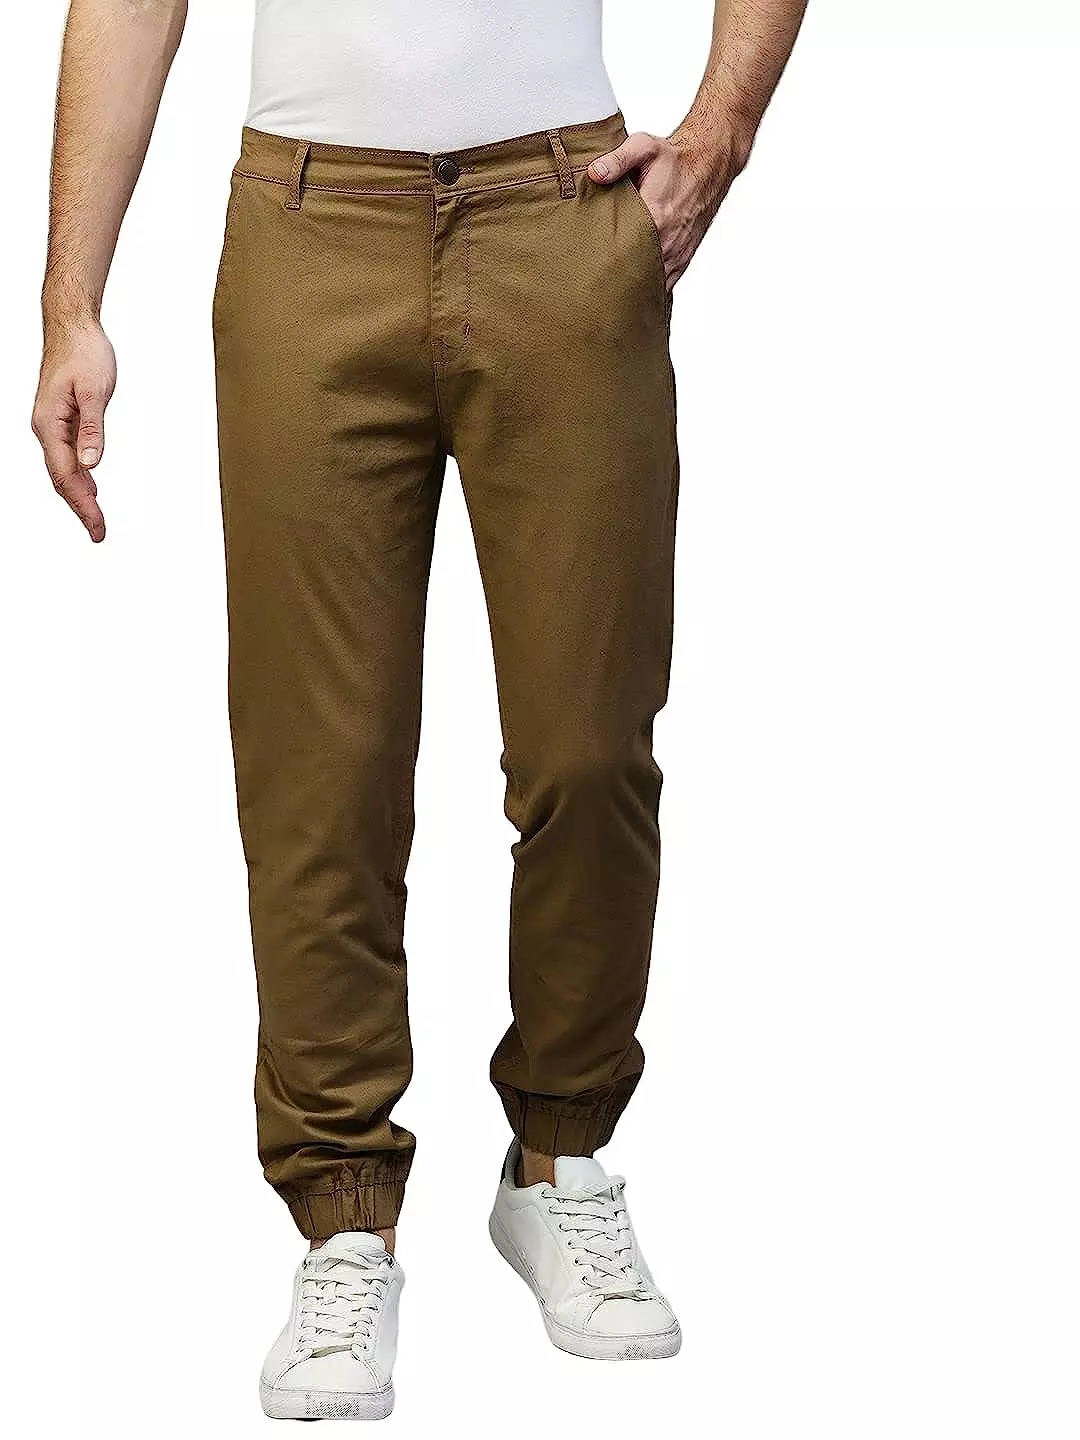 Buy Hubberholme Men's Regular Cargo Trousers (8025_38_Grey at Amazon.in